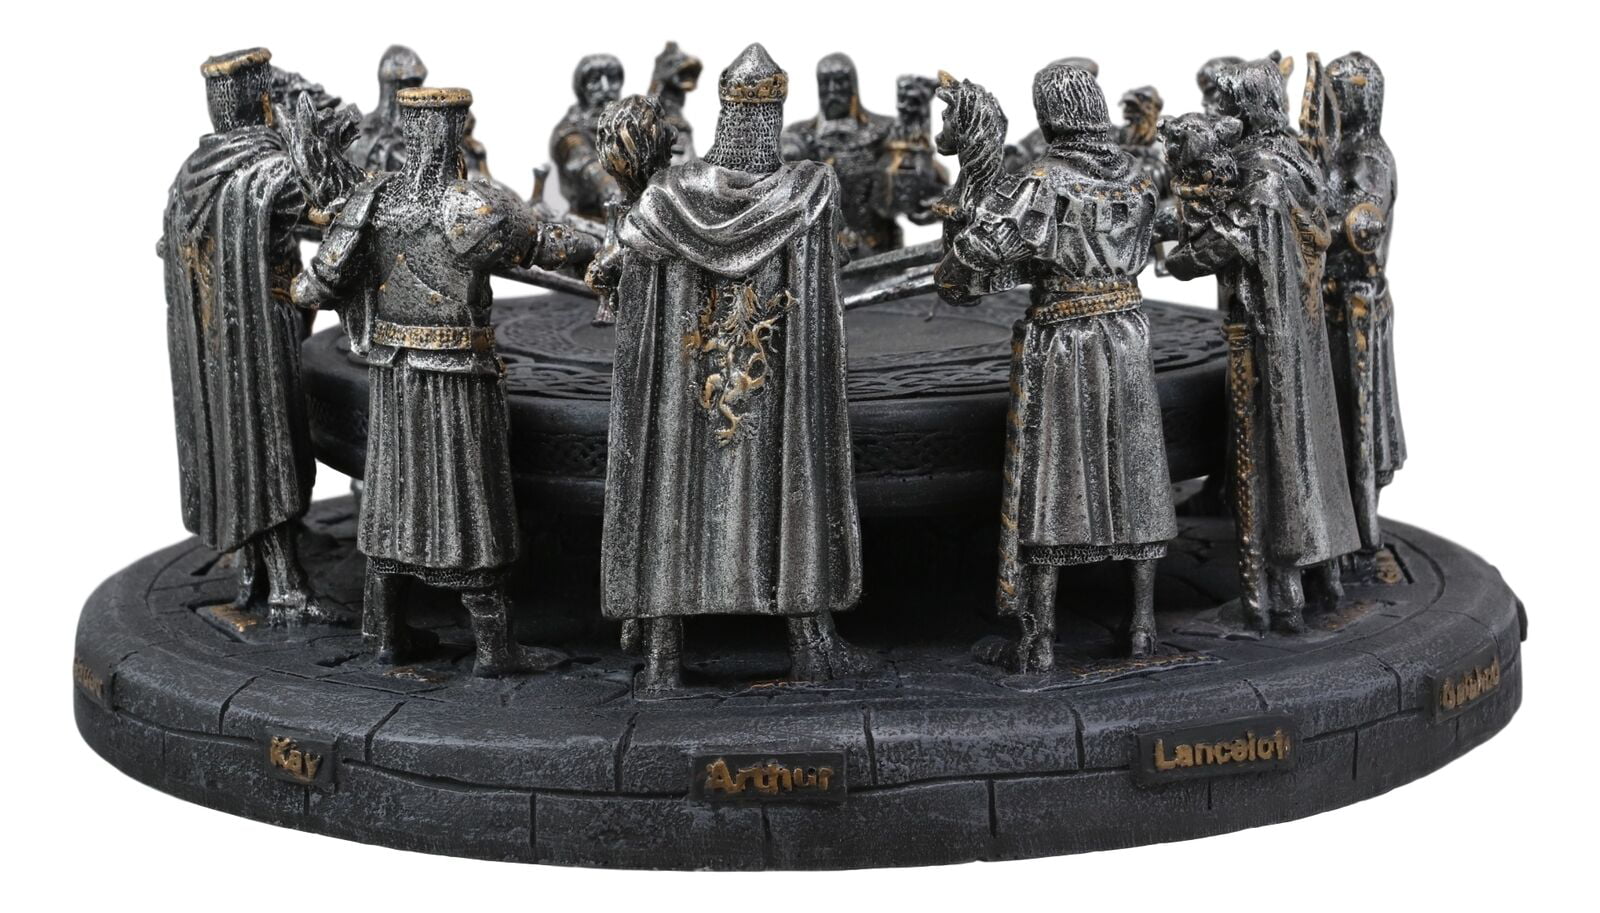 King Arthur The Black Knight Warrior Figurine 13.25" Height Sculpture 